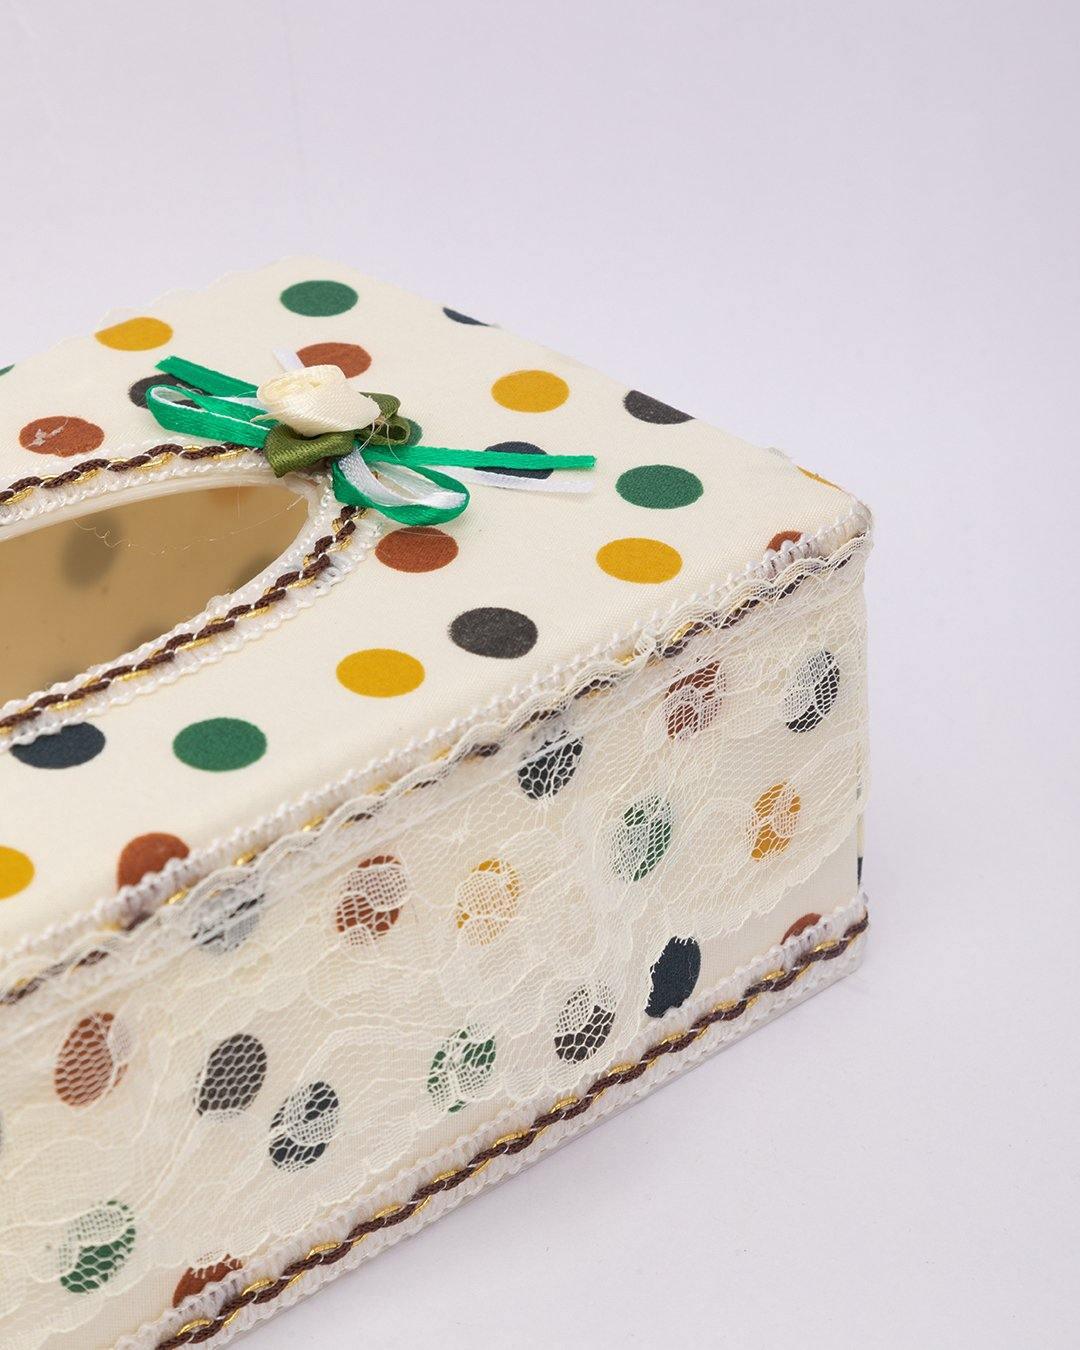 Tissue Box, Modern Design, Cream Colour, Plastic - MARKET99